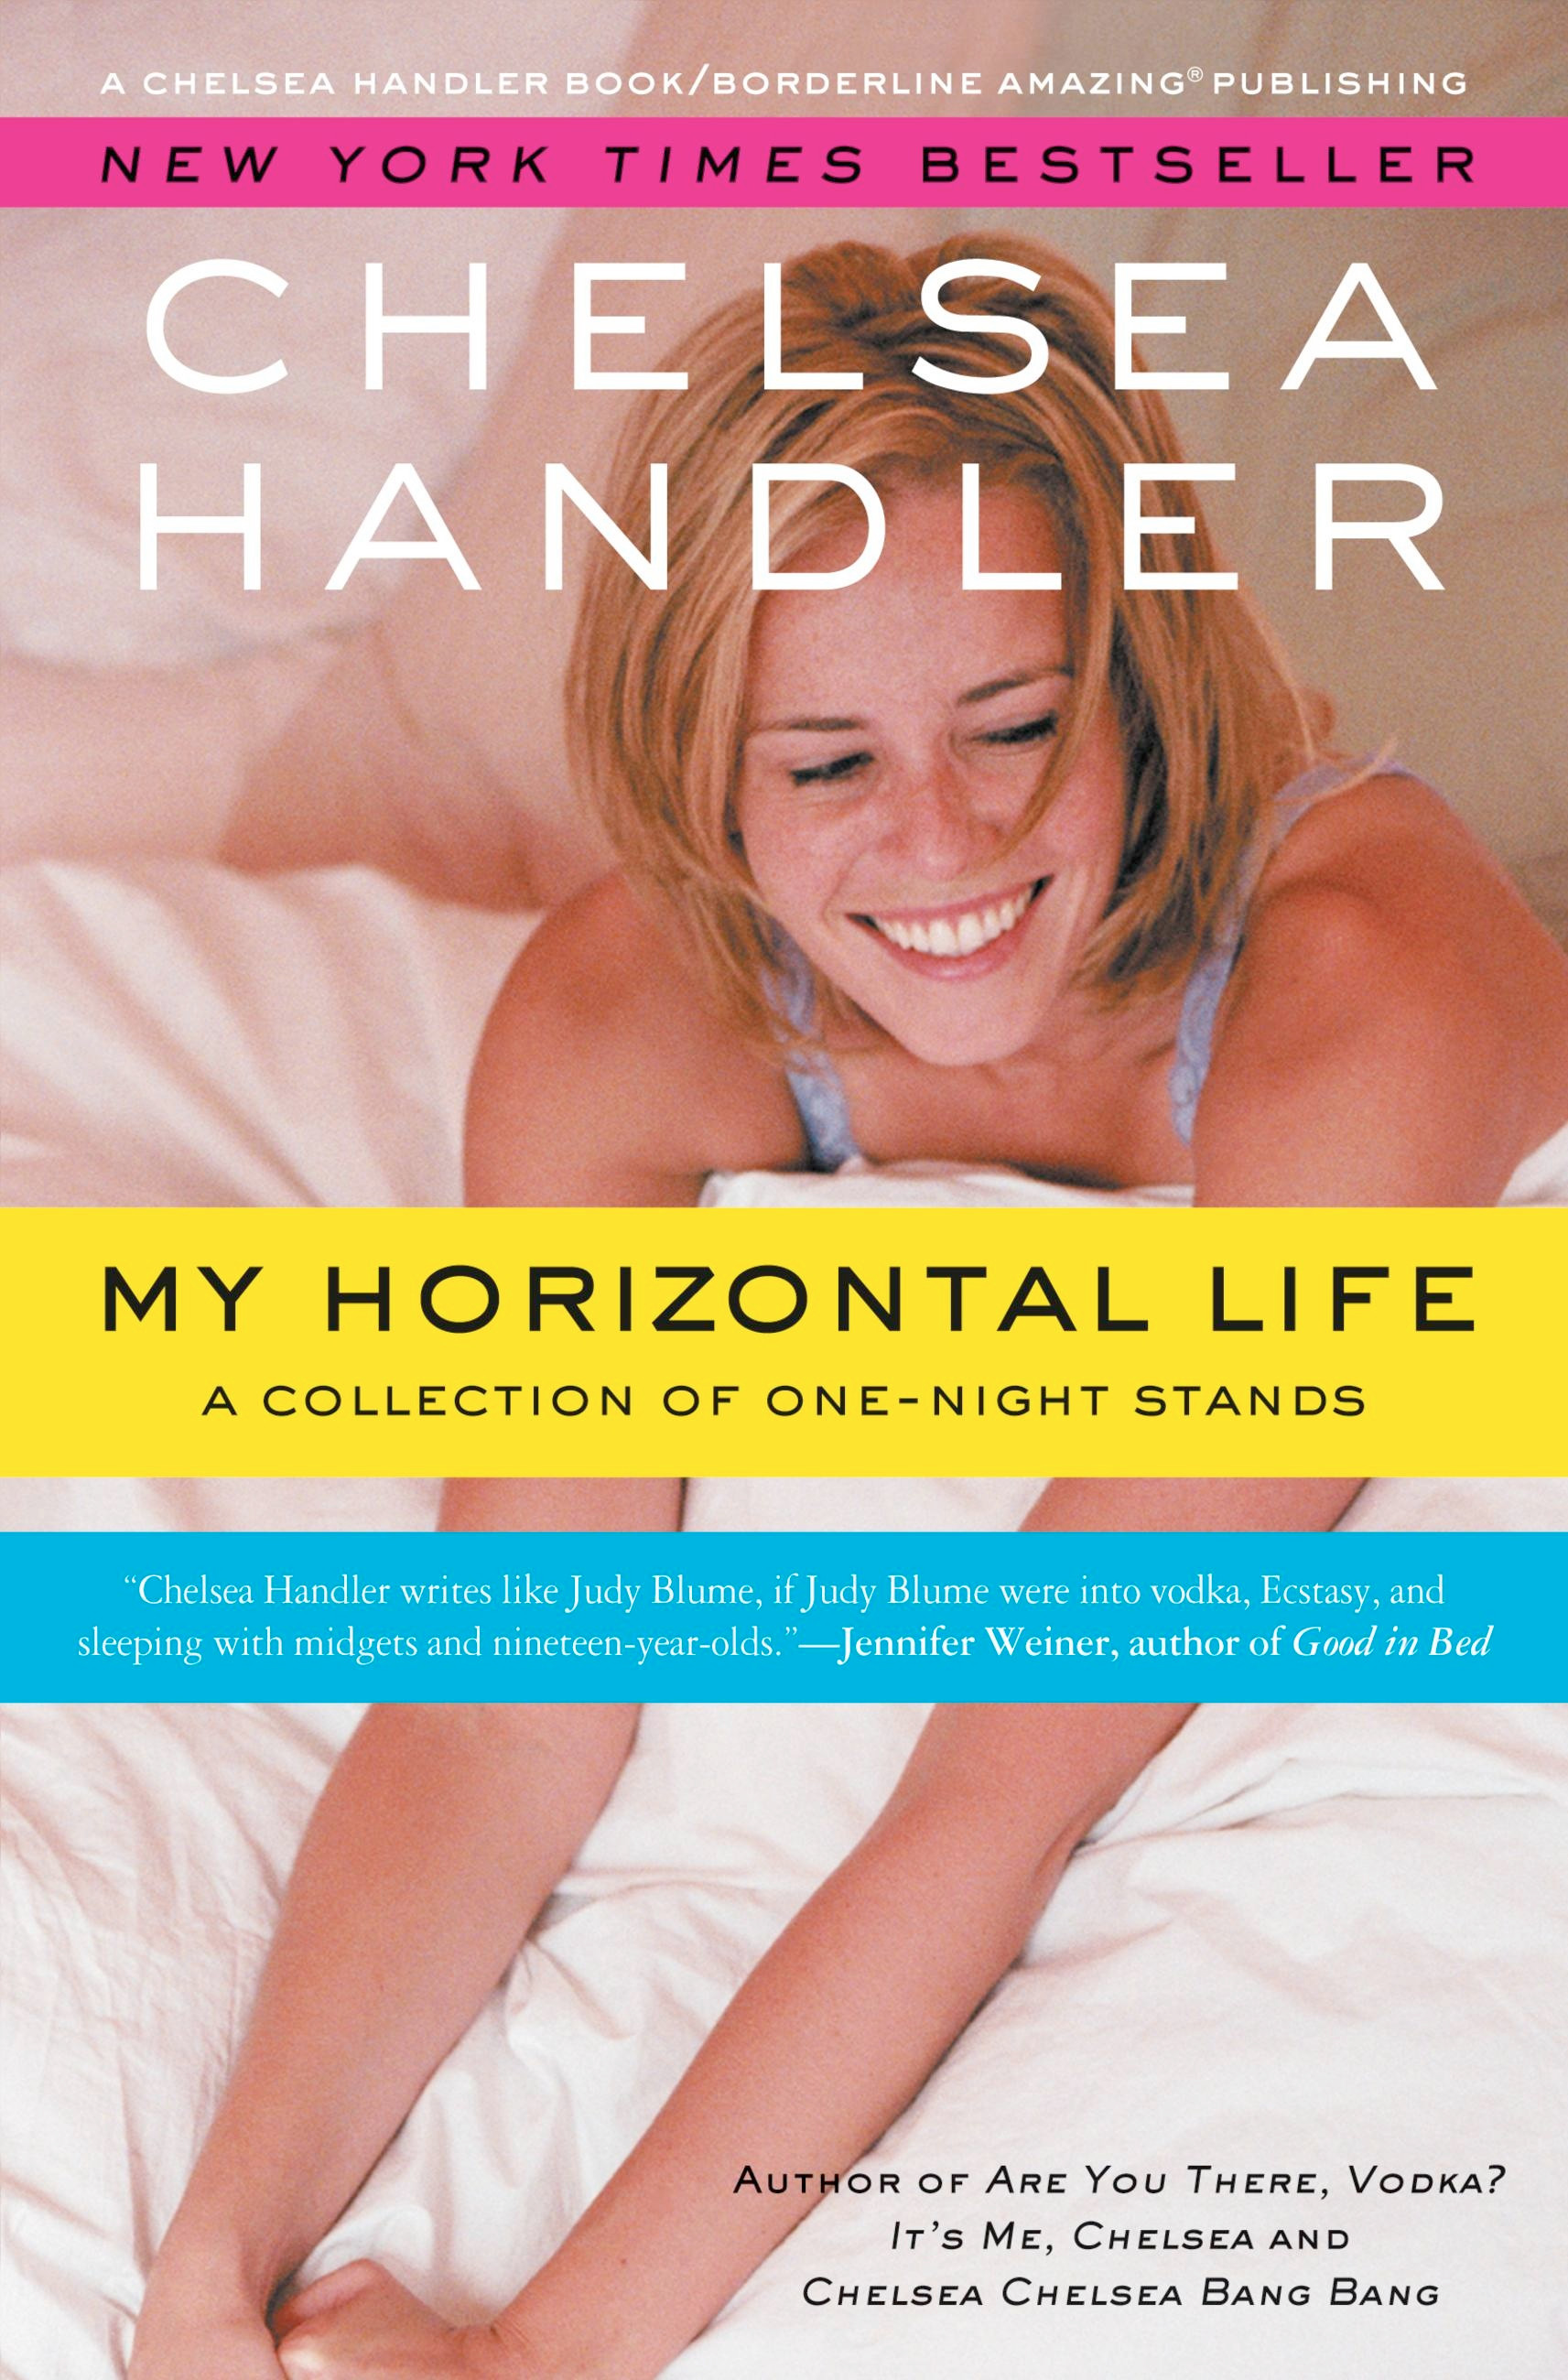 10. ‘My Horizontal Life’ by Chelsea Handler